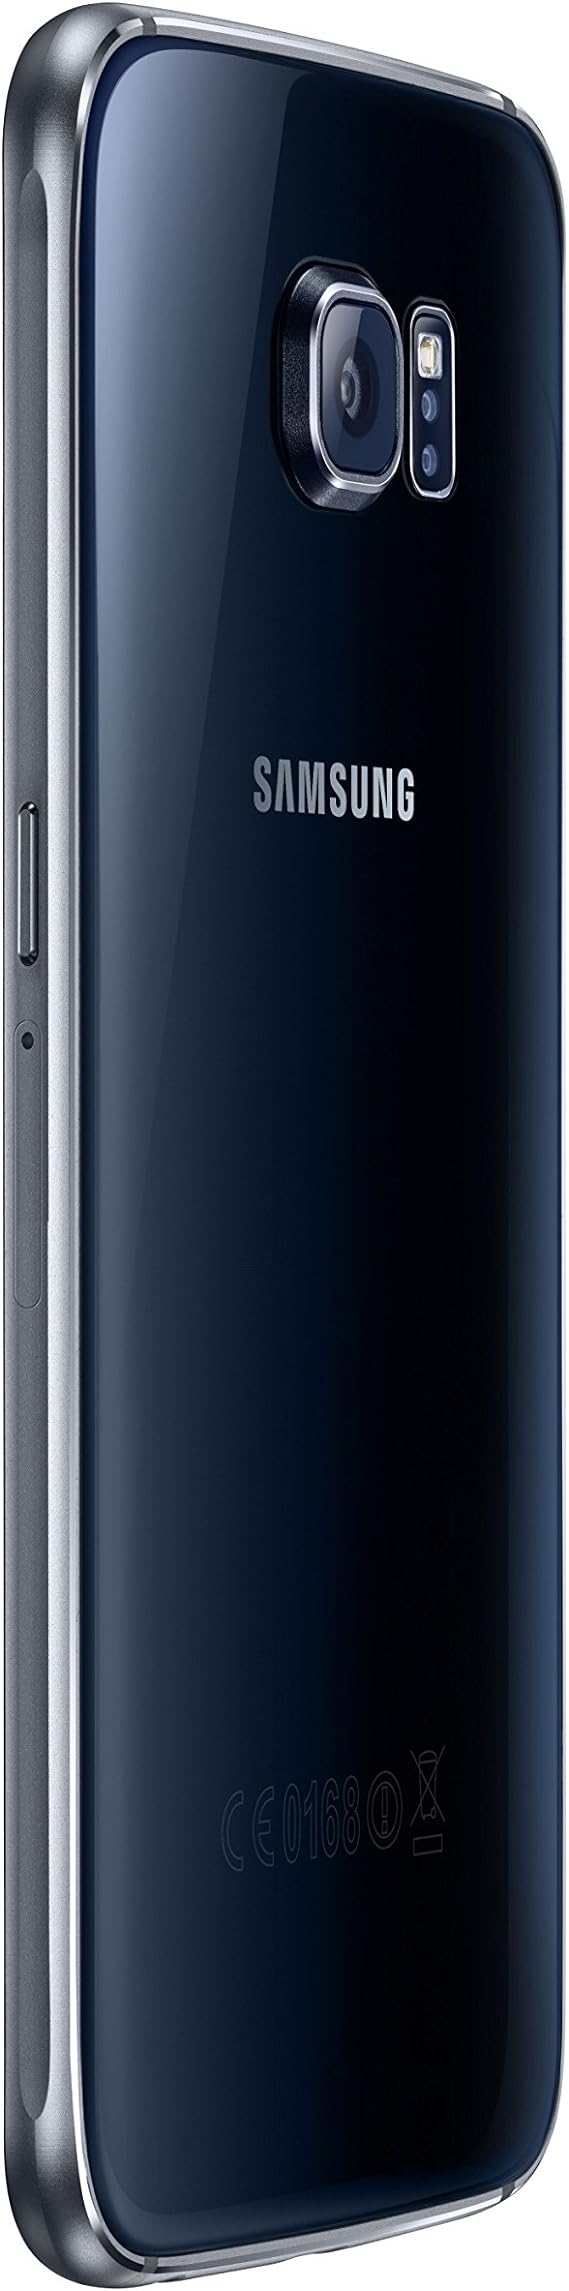 Sam Galaxy S6, Black 32GB Verizon Used - Good  CONDITION